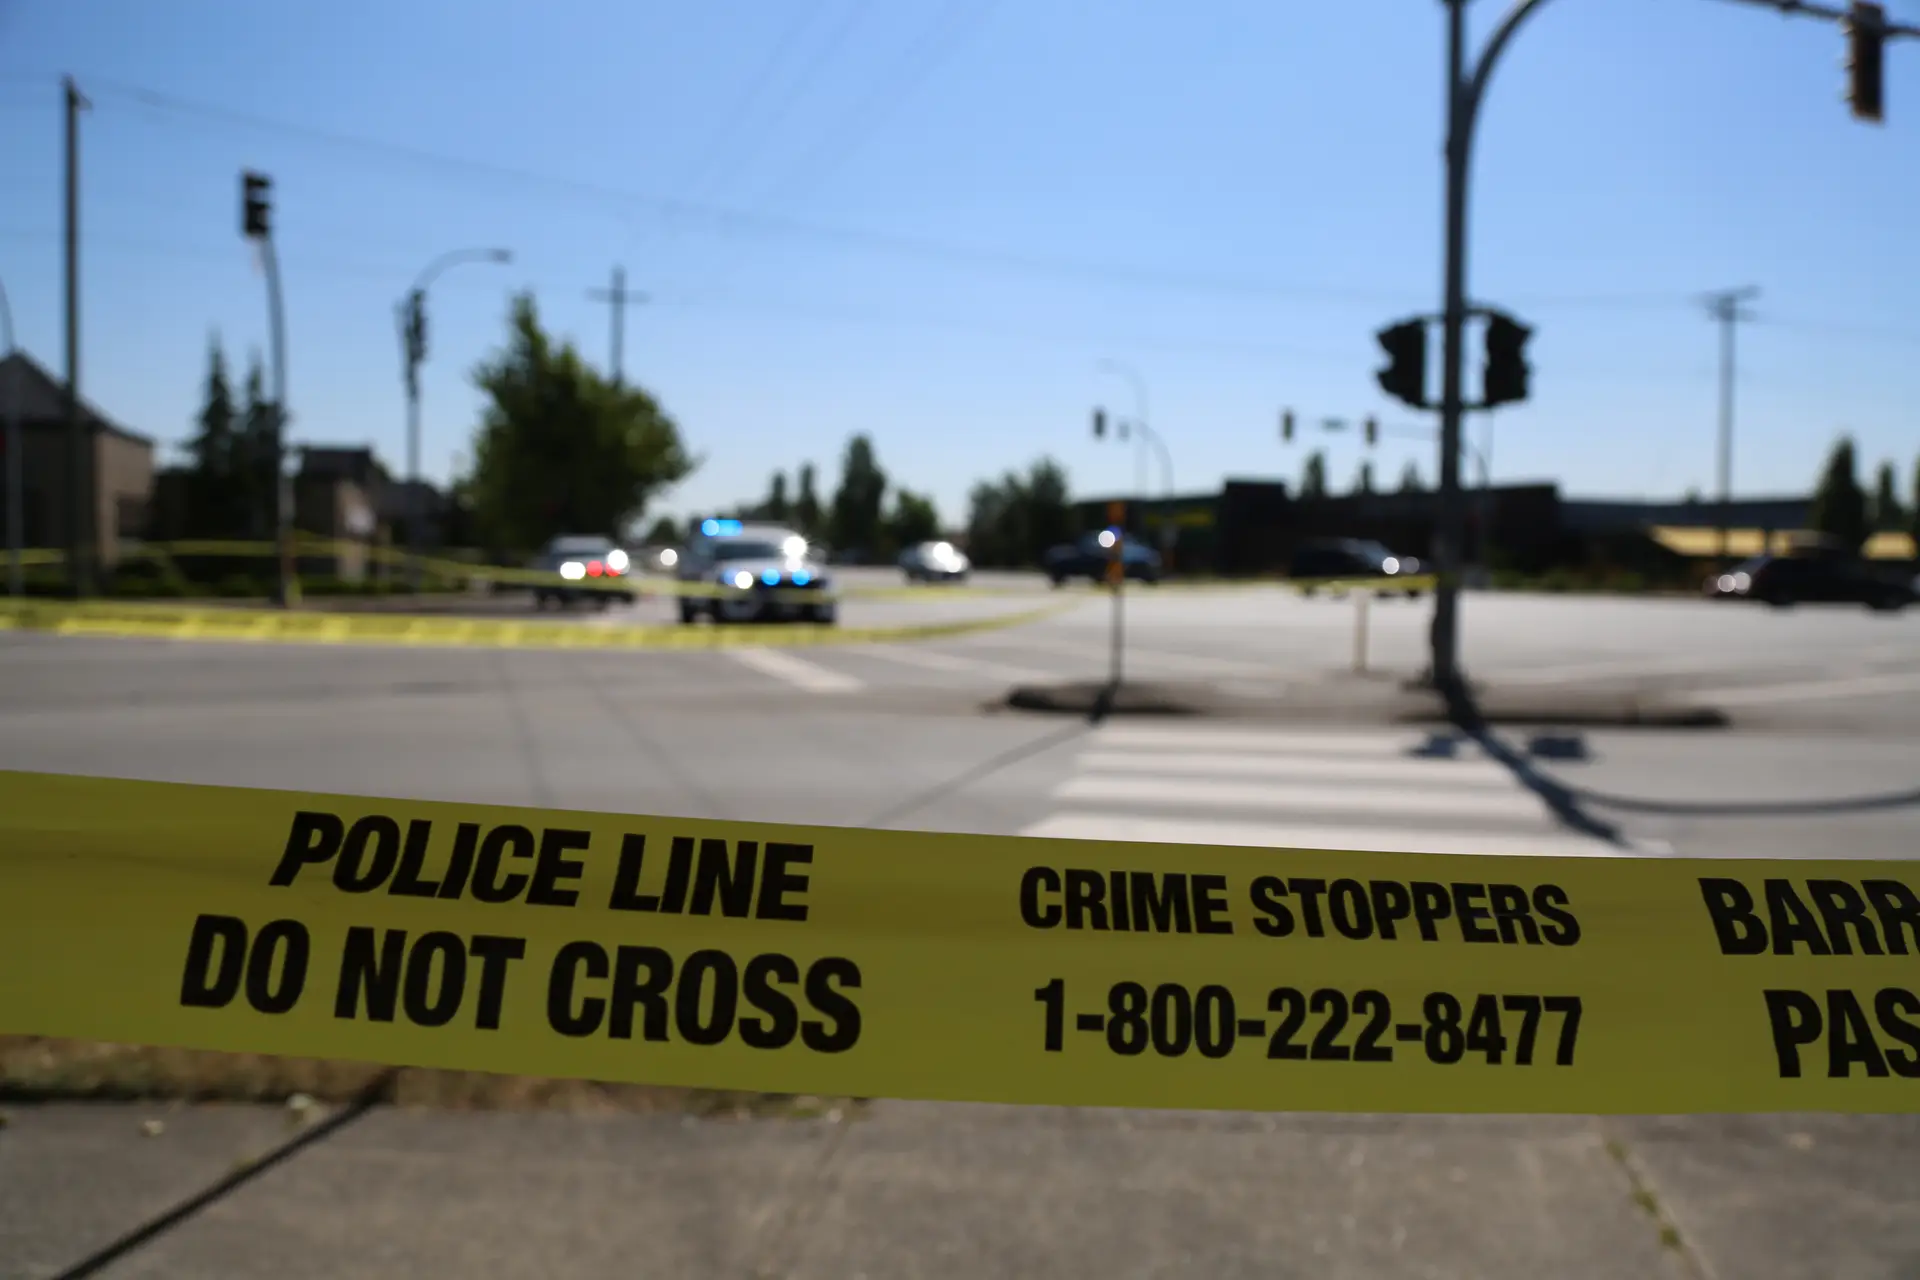 Dez mortos devido a esfaqueamentos no Canadá